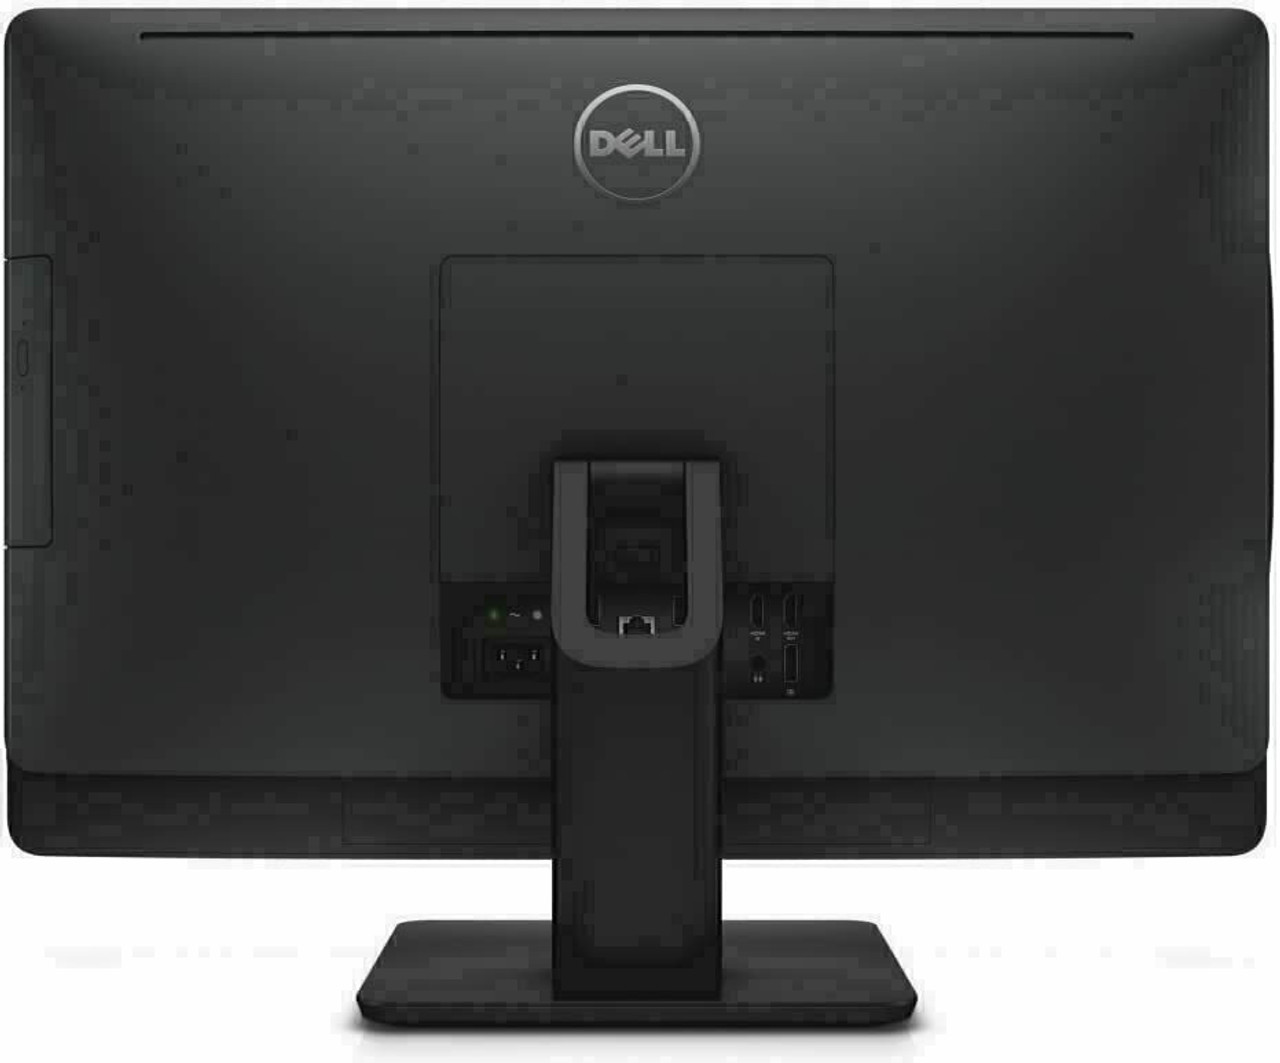 Dell OptiPlex 9030 All-in-One Desktop Computer 23" AIO PC, Windows 10 Pro, Intel Core i7-4590S 3.20GHz, 8GB RAM, 512GB SSD, Webcam, WiFi, Bluetooth (Renewed)